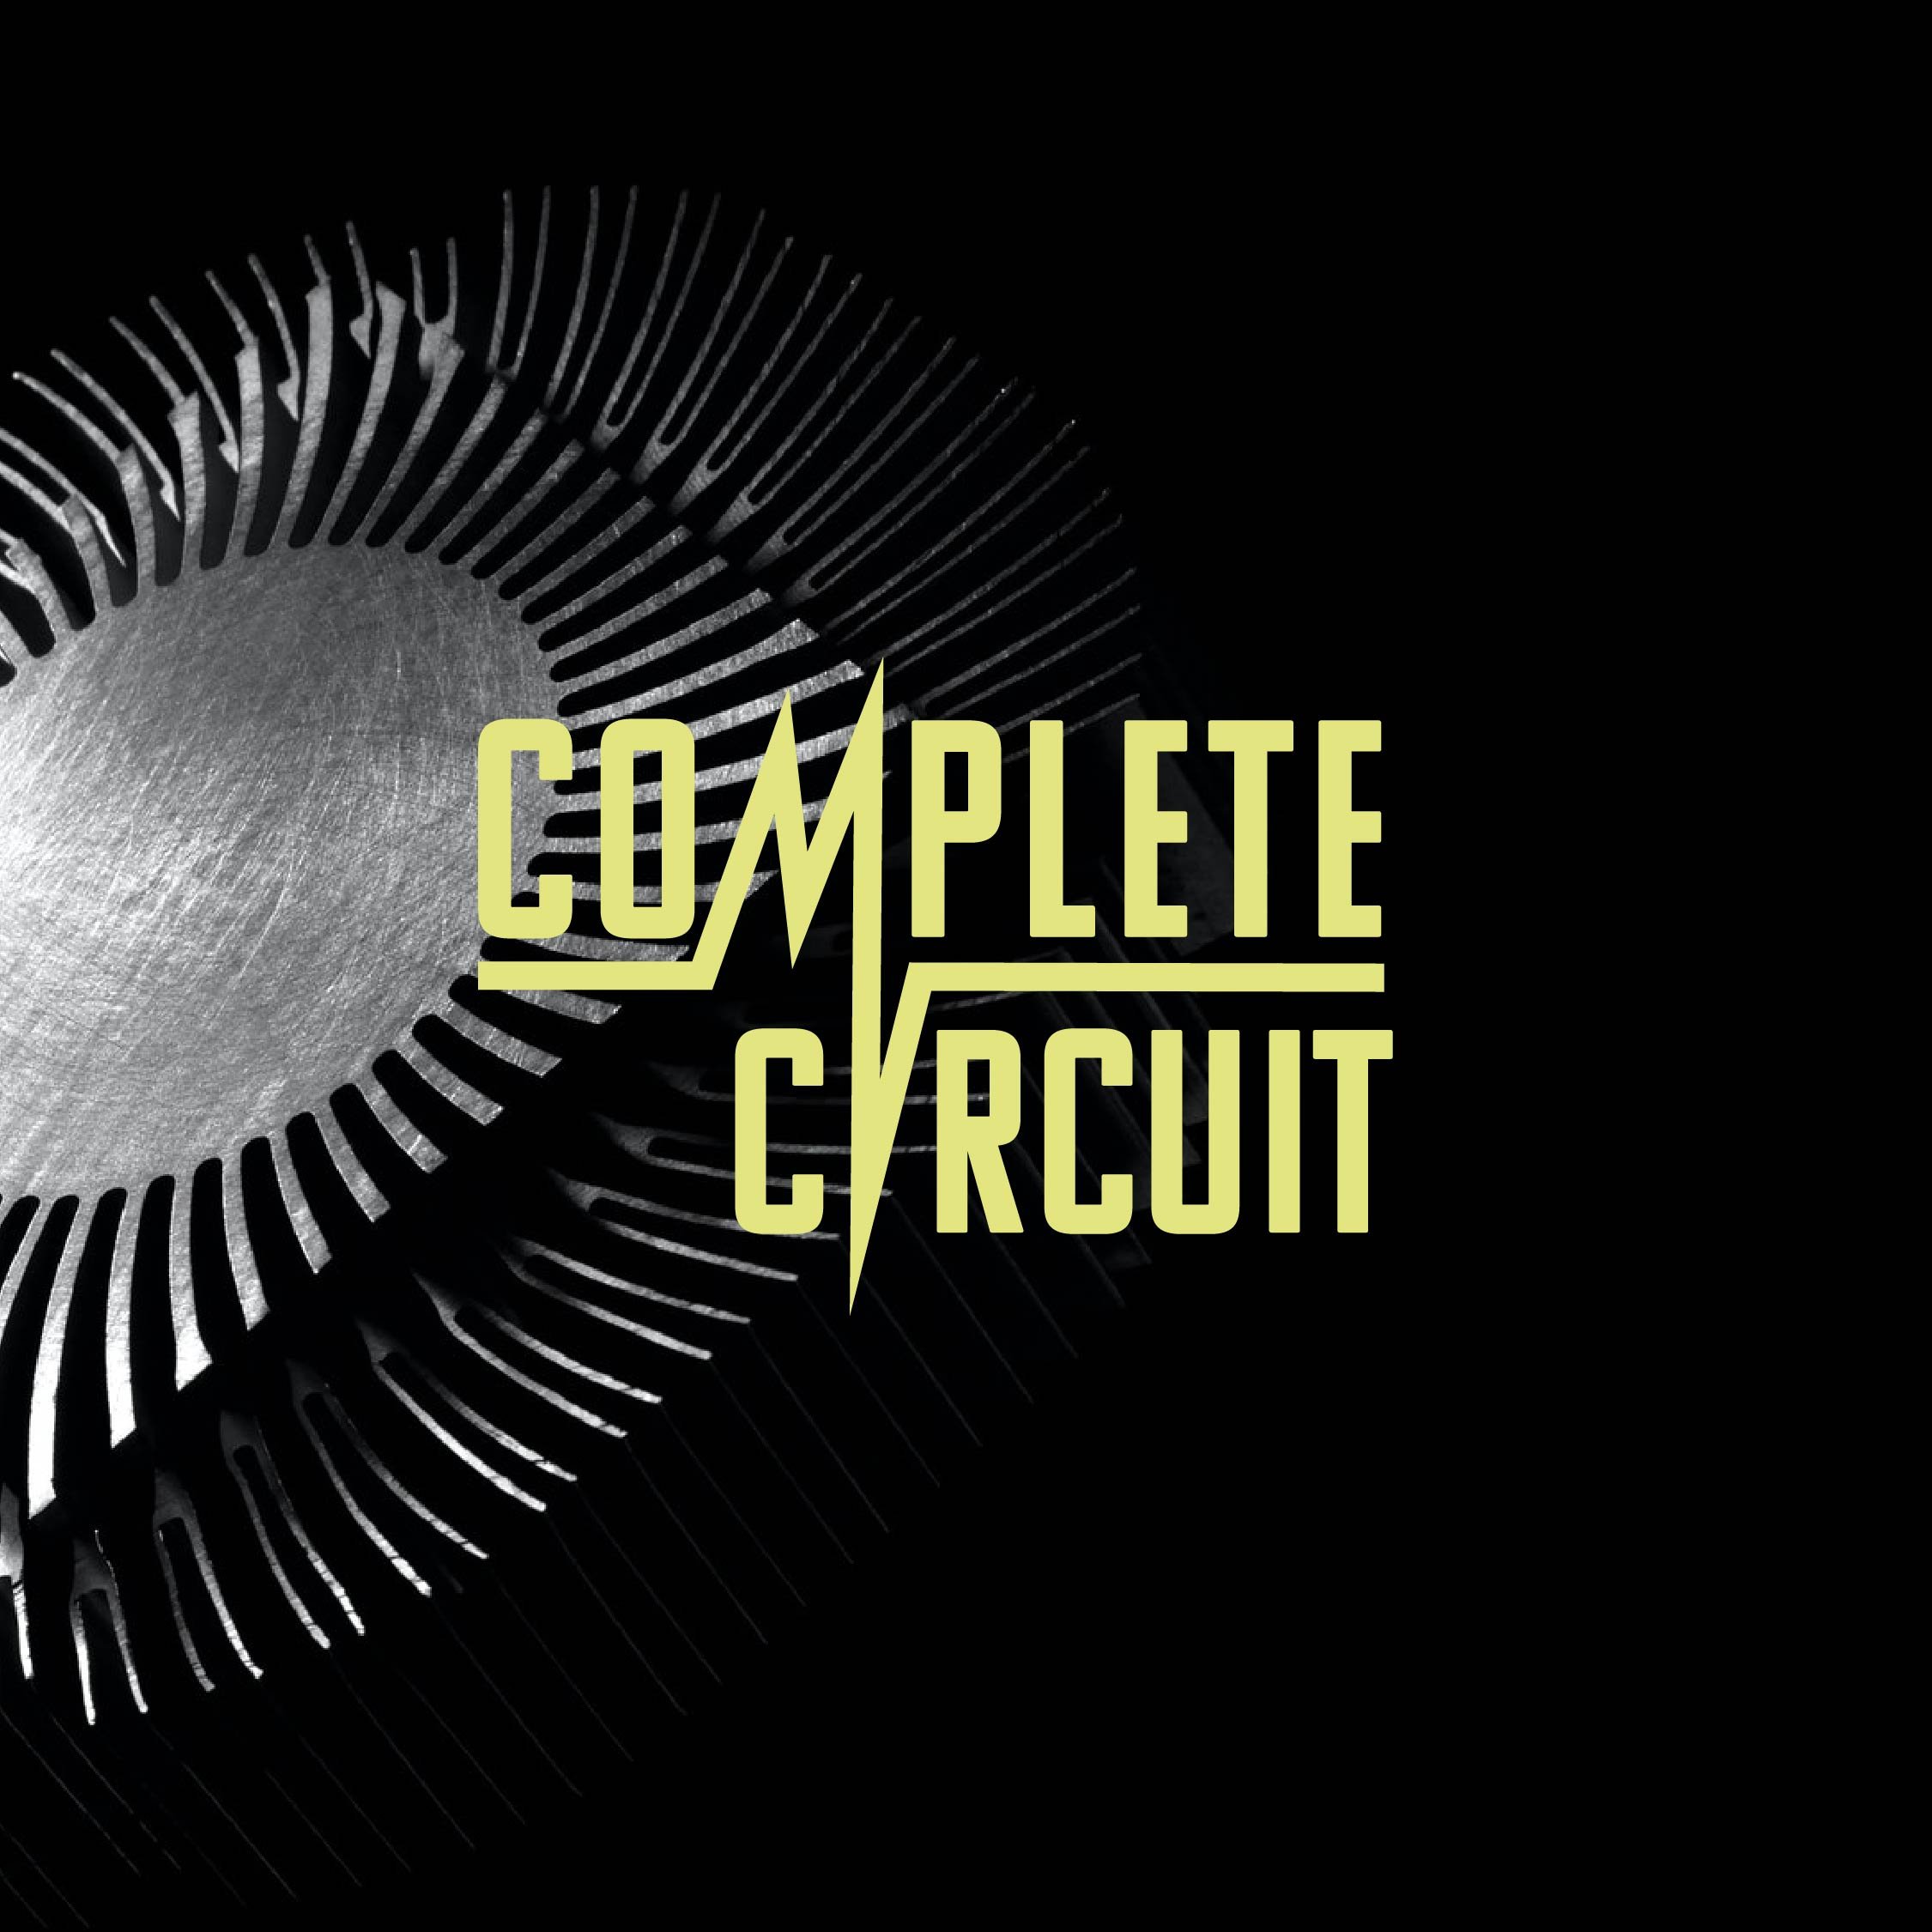 Complete circuit logo.jpg